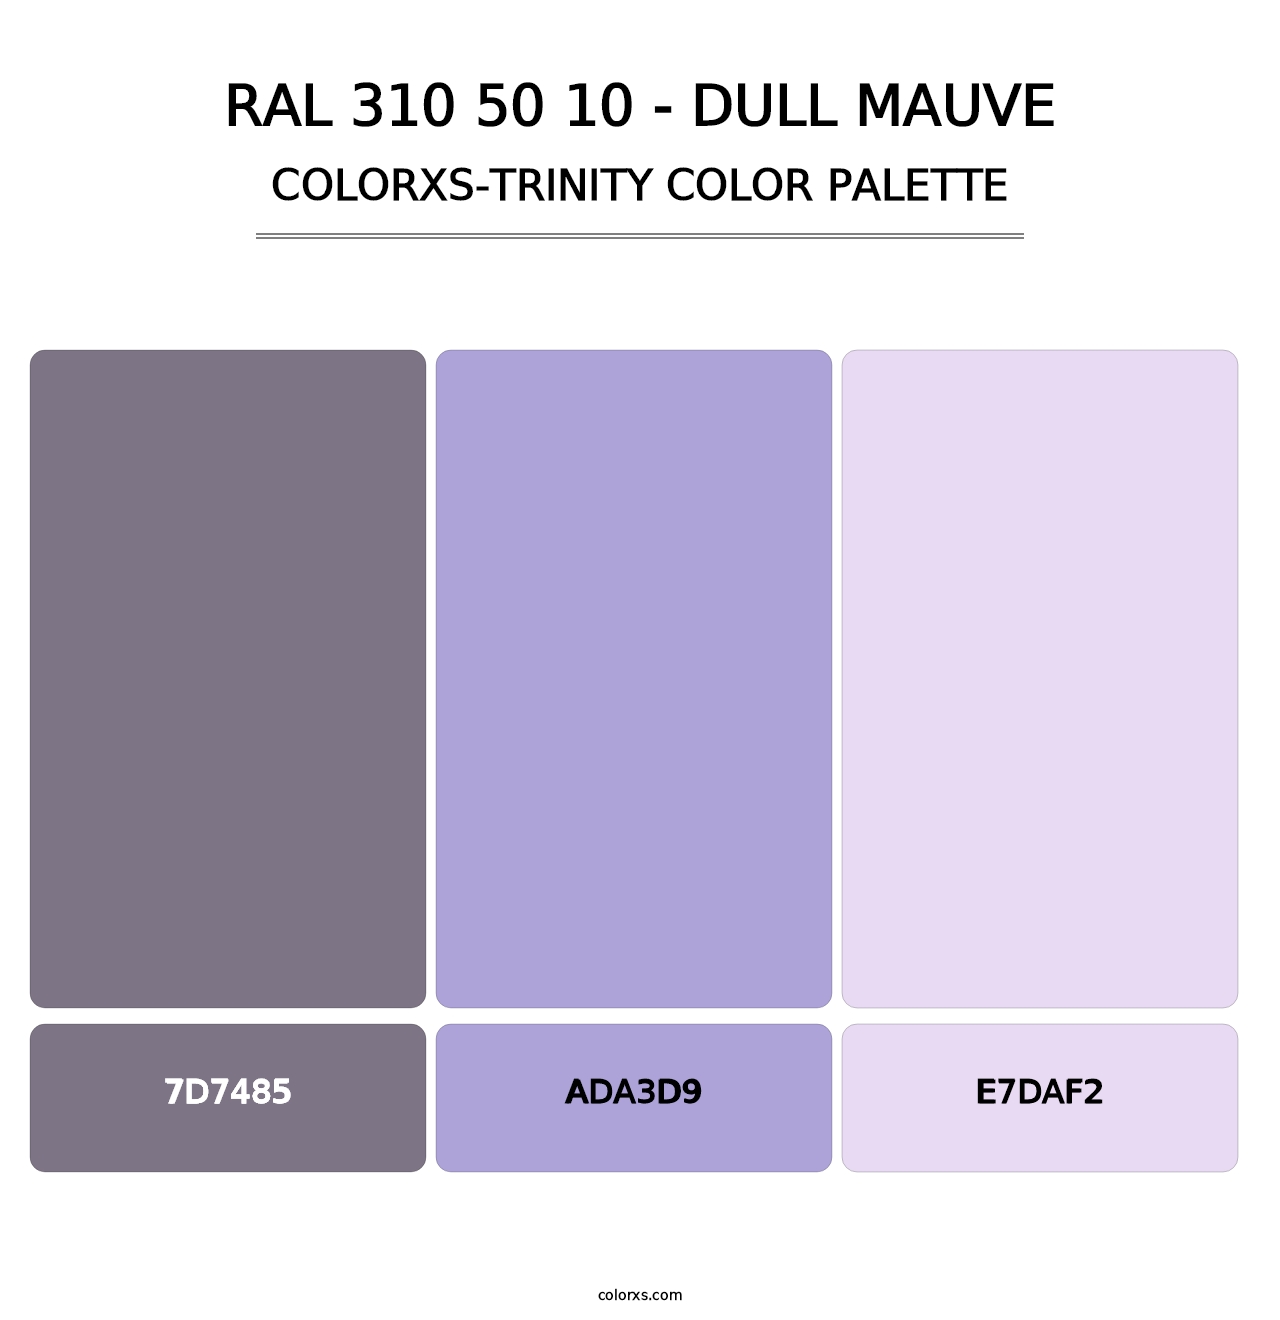 RAL 310 50 10 - Dull Mauve - Colorxs Trinity Palette